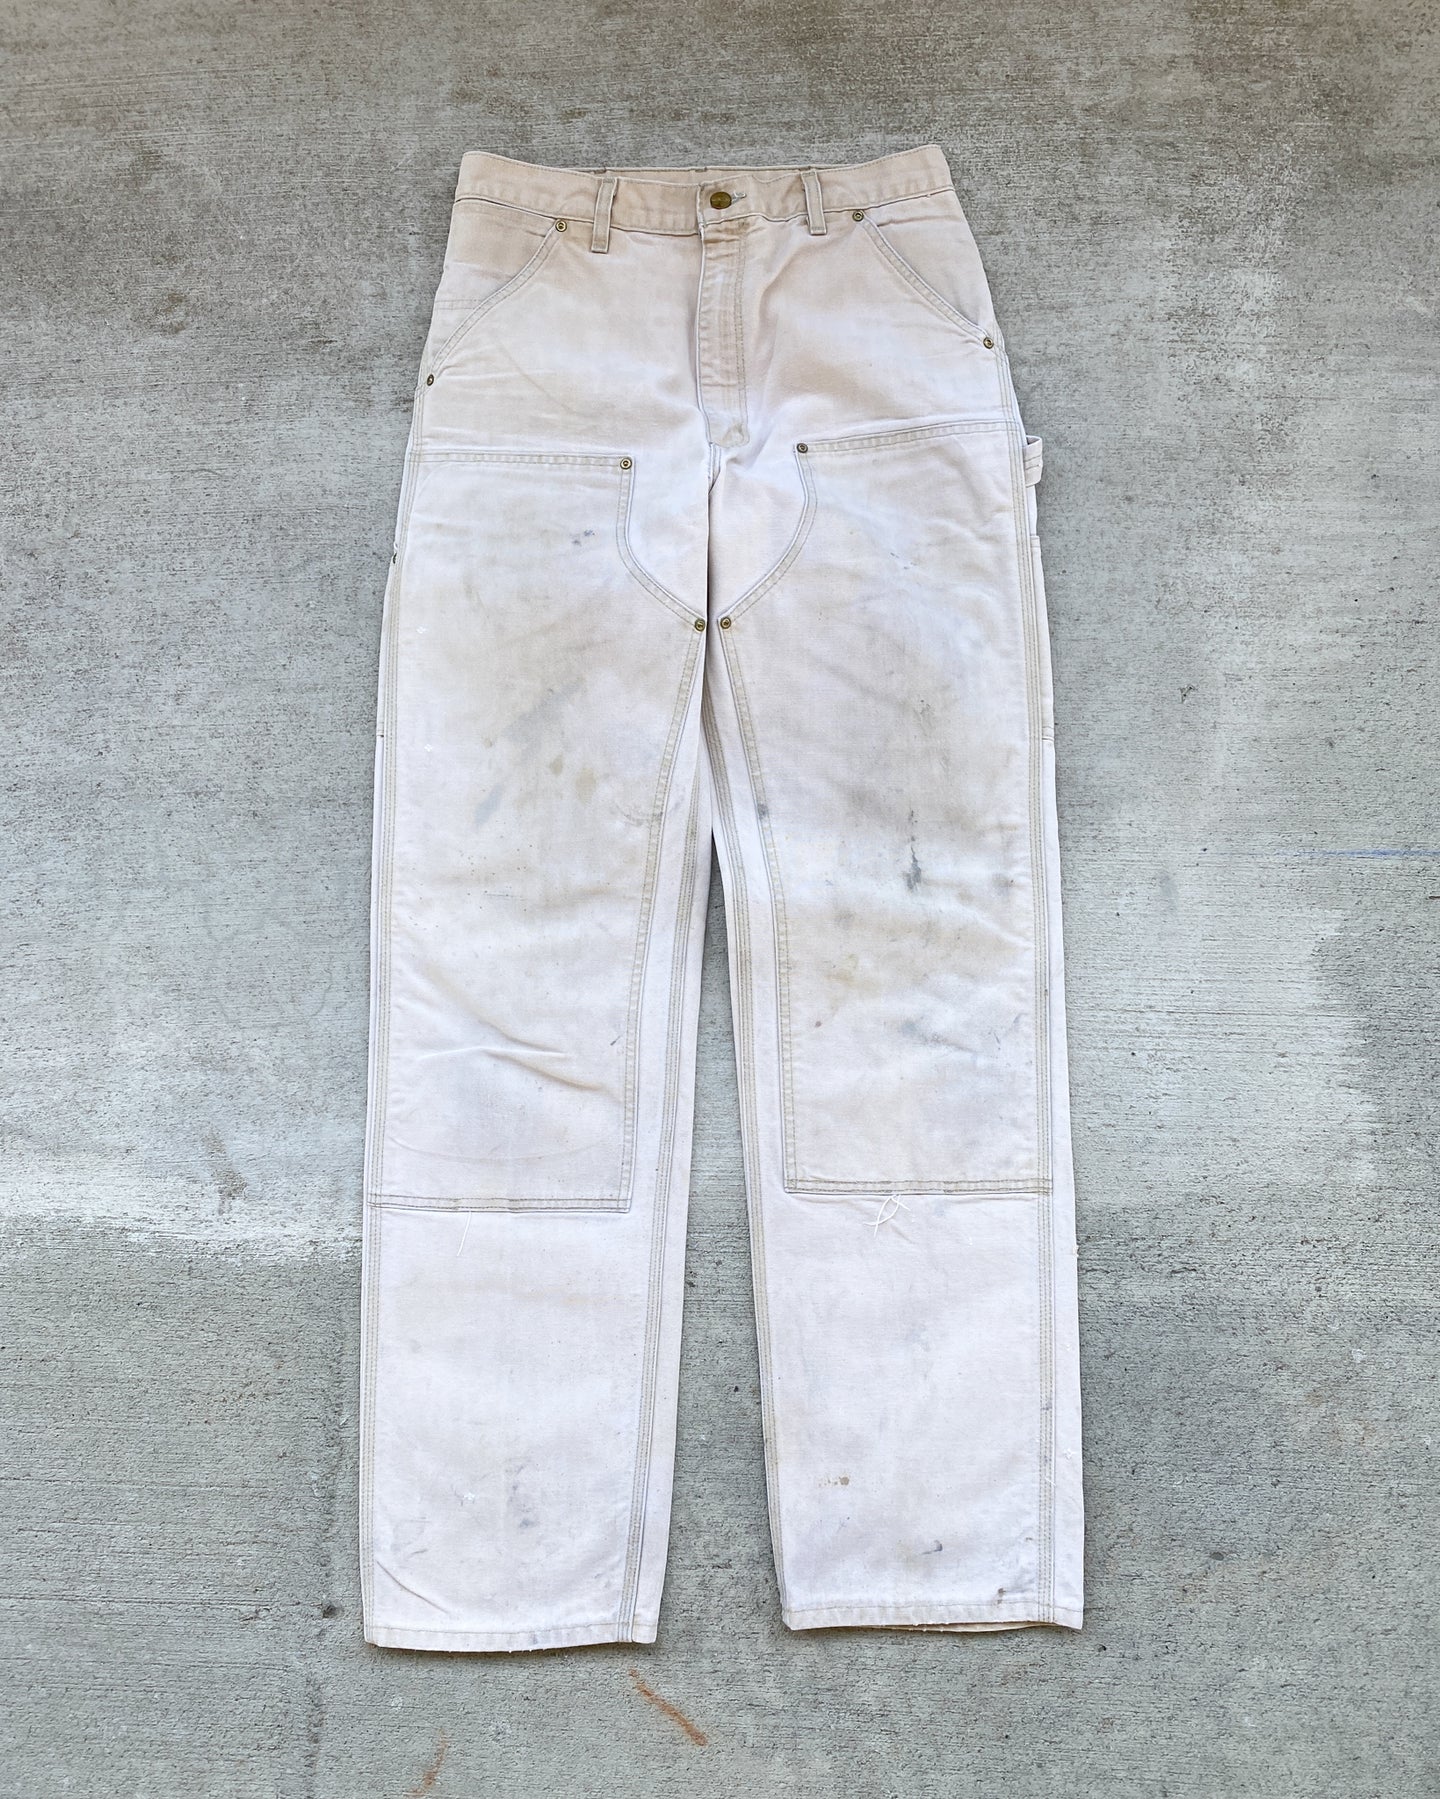 1980s Carhartt Sun Bleached Double Knee Pants - Size 31 x 34